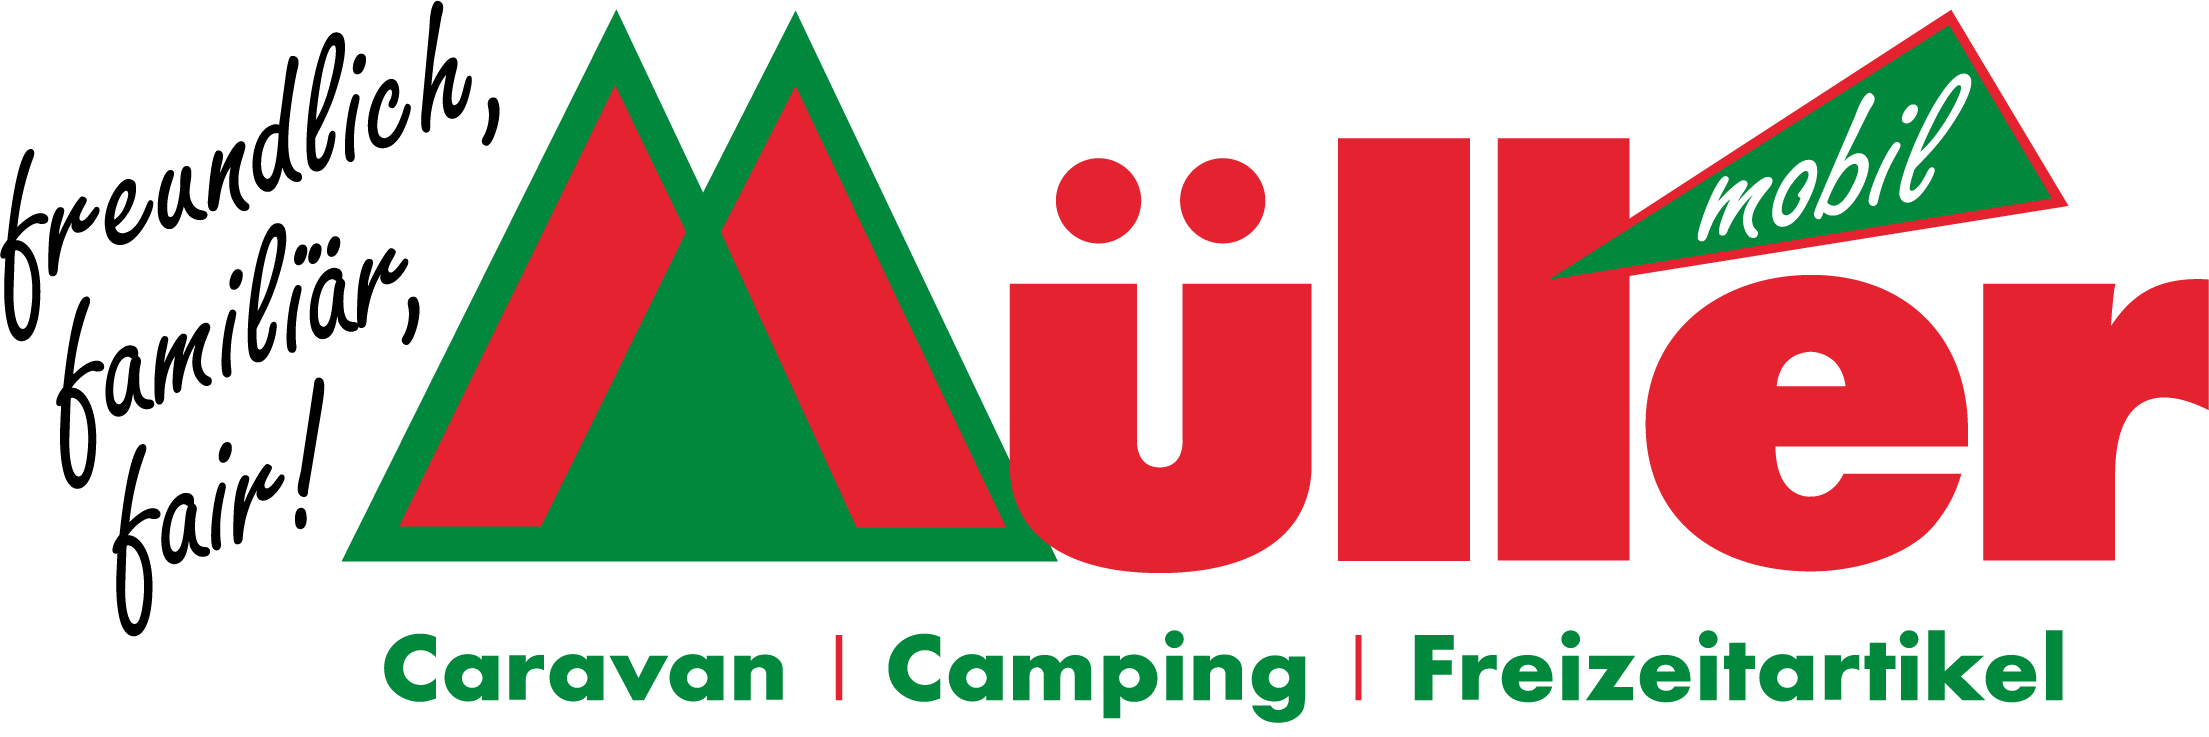 Müller mobil GmbH